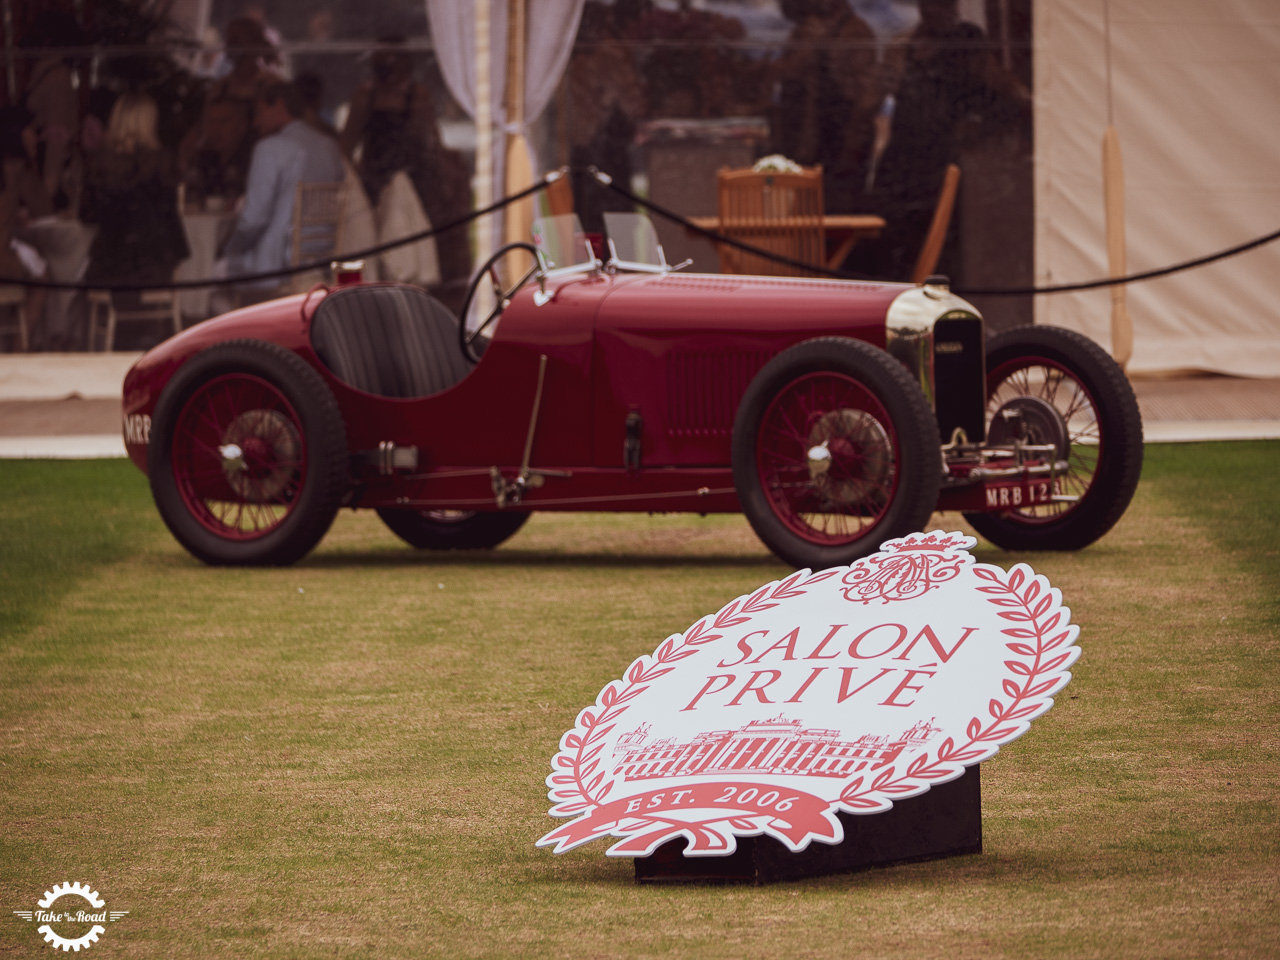 Salon Privé returns with five day celebration of automotive excellence